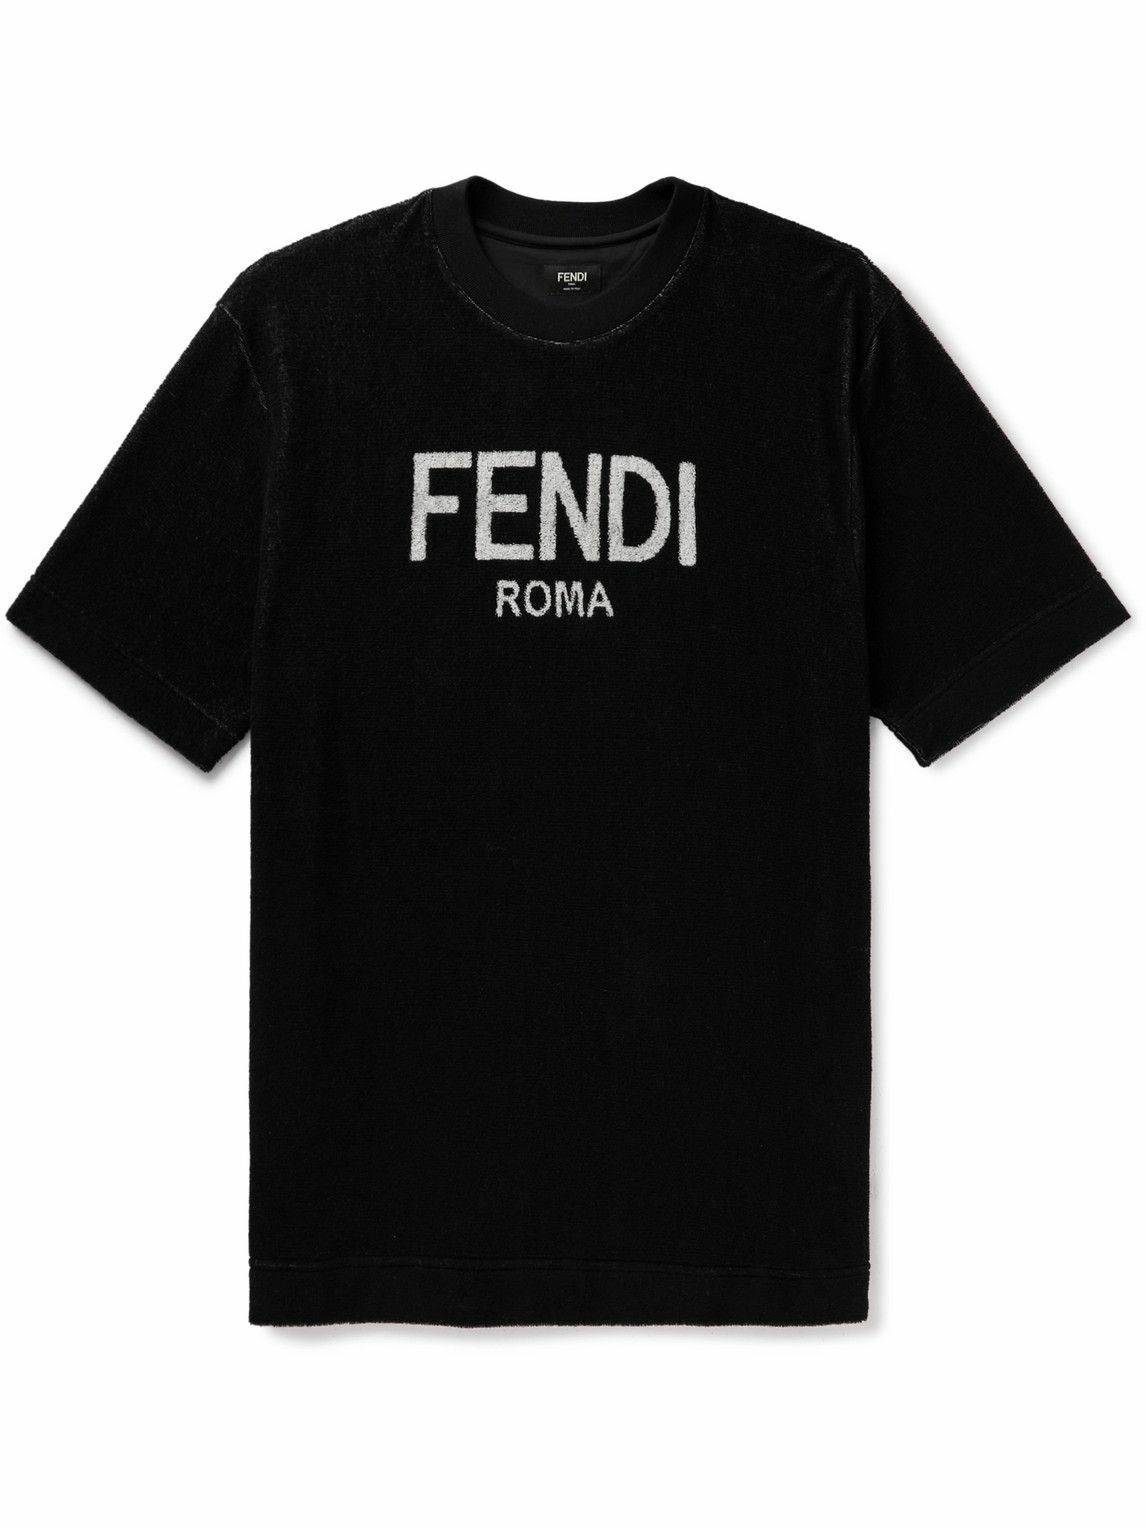 Fendi - Logo-Print Cotton-Blend Terry Sweatshirt - Black Fendi